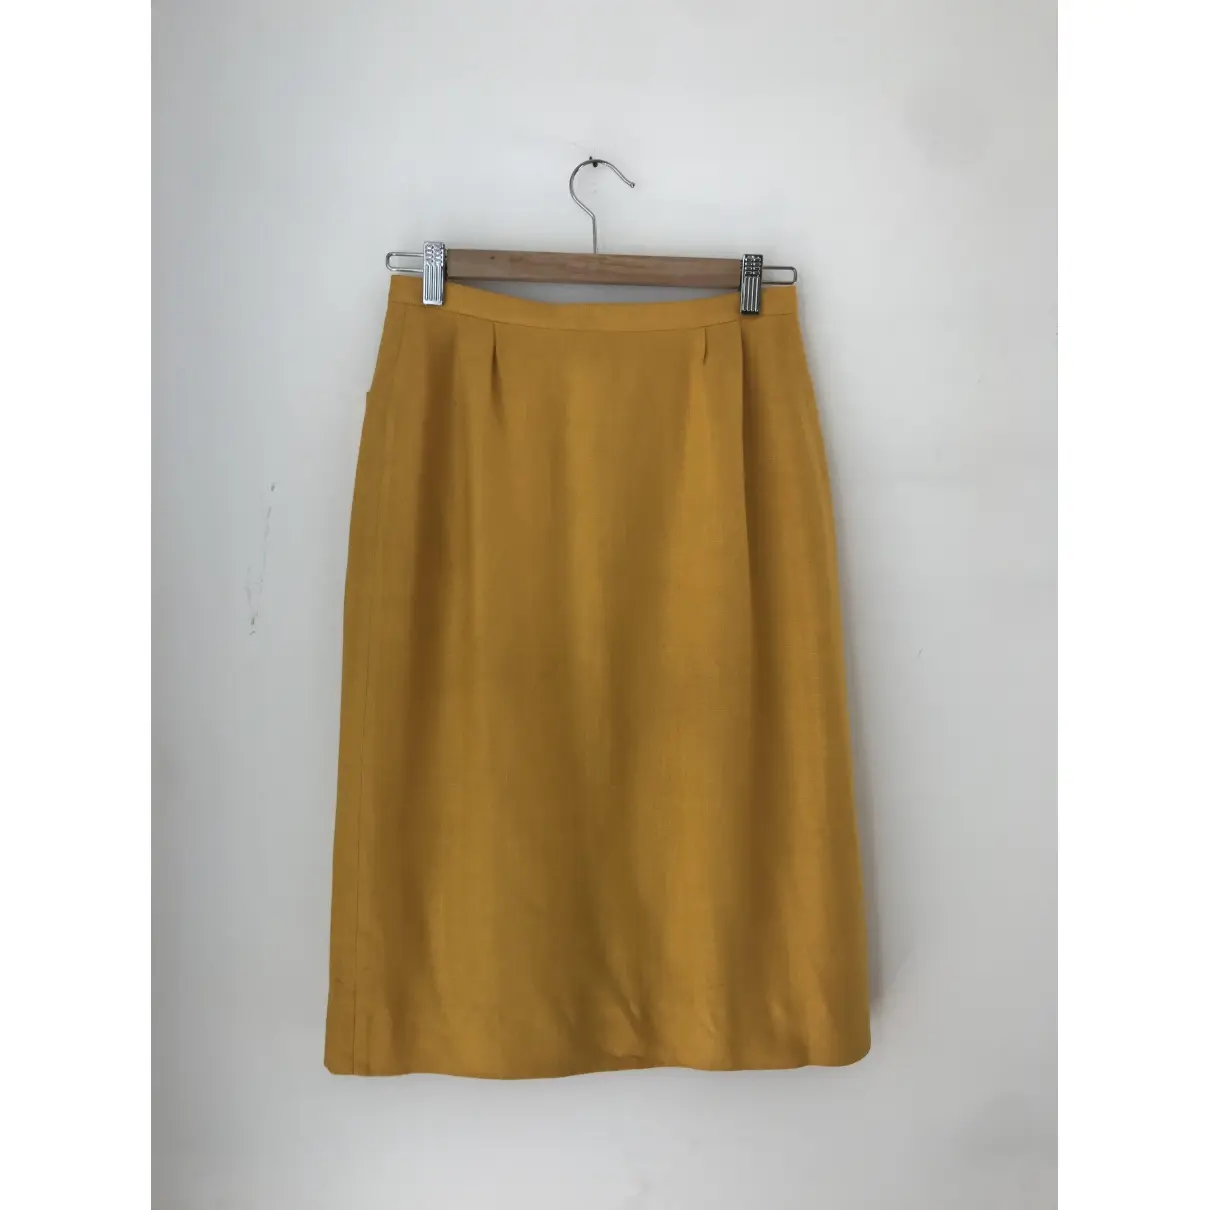 Salvatore Ferragamo Mid-length skirt for sale - Vintage